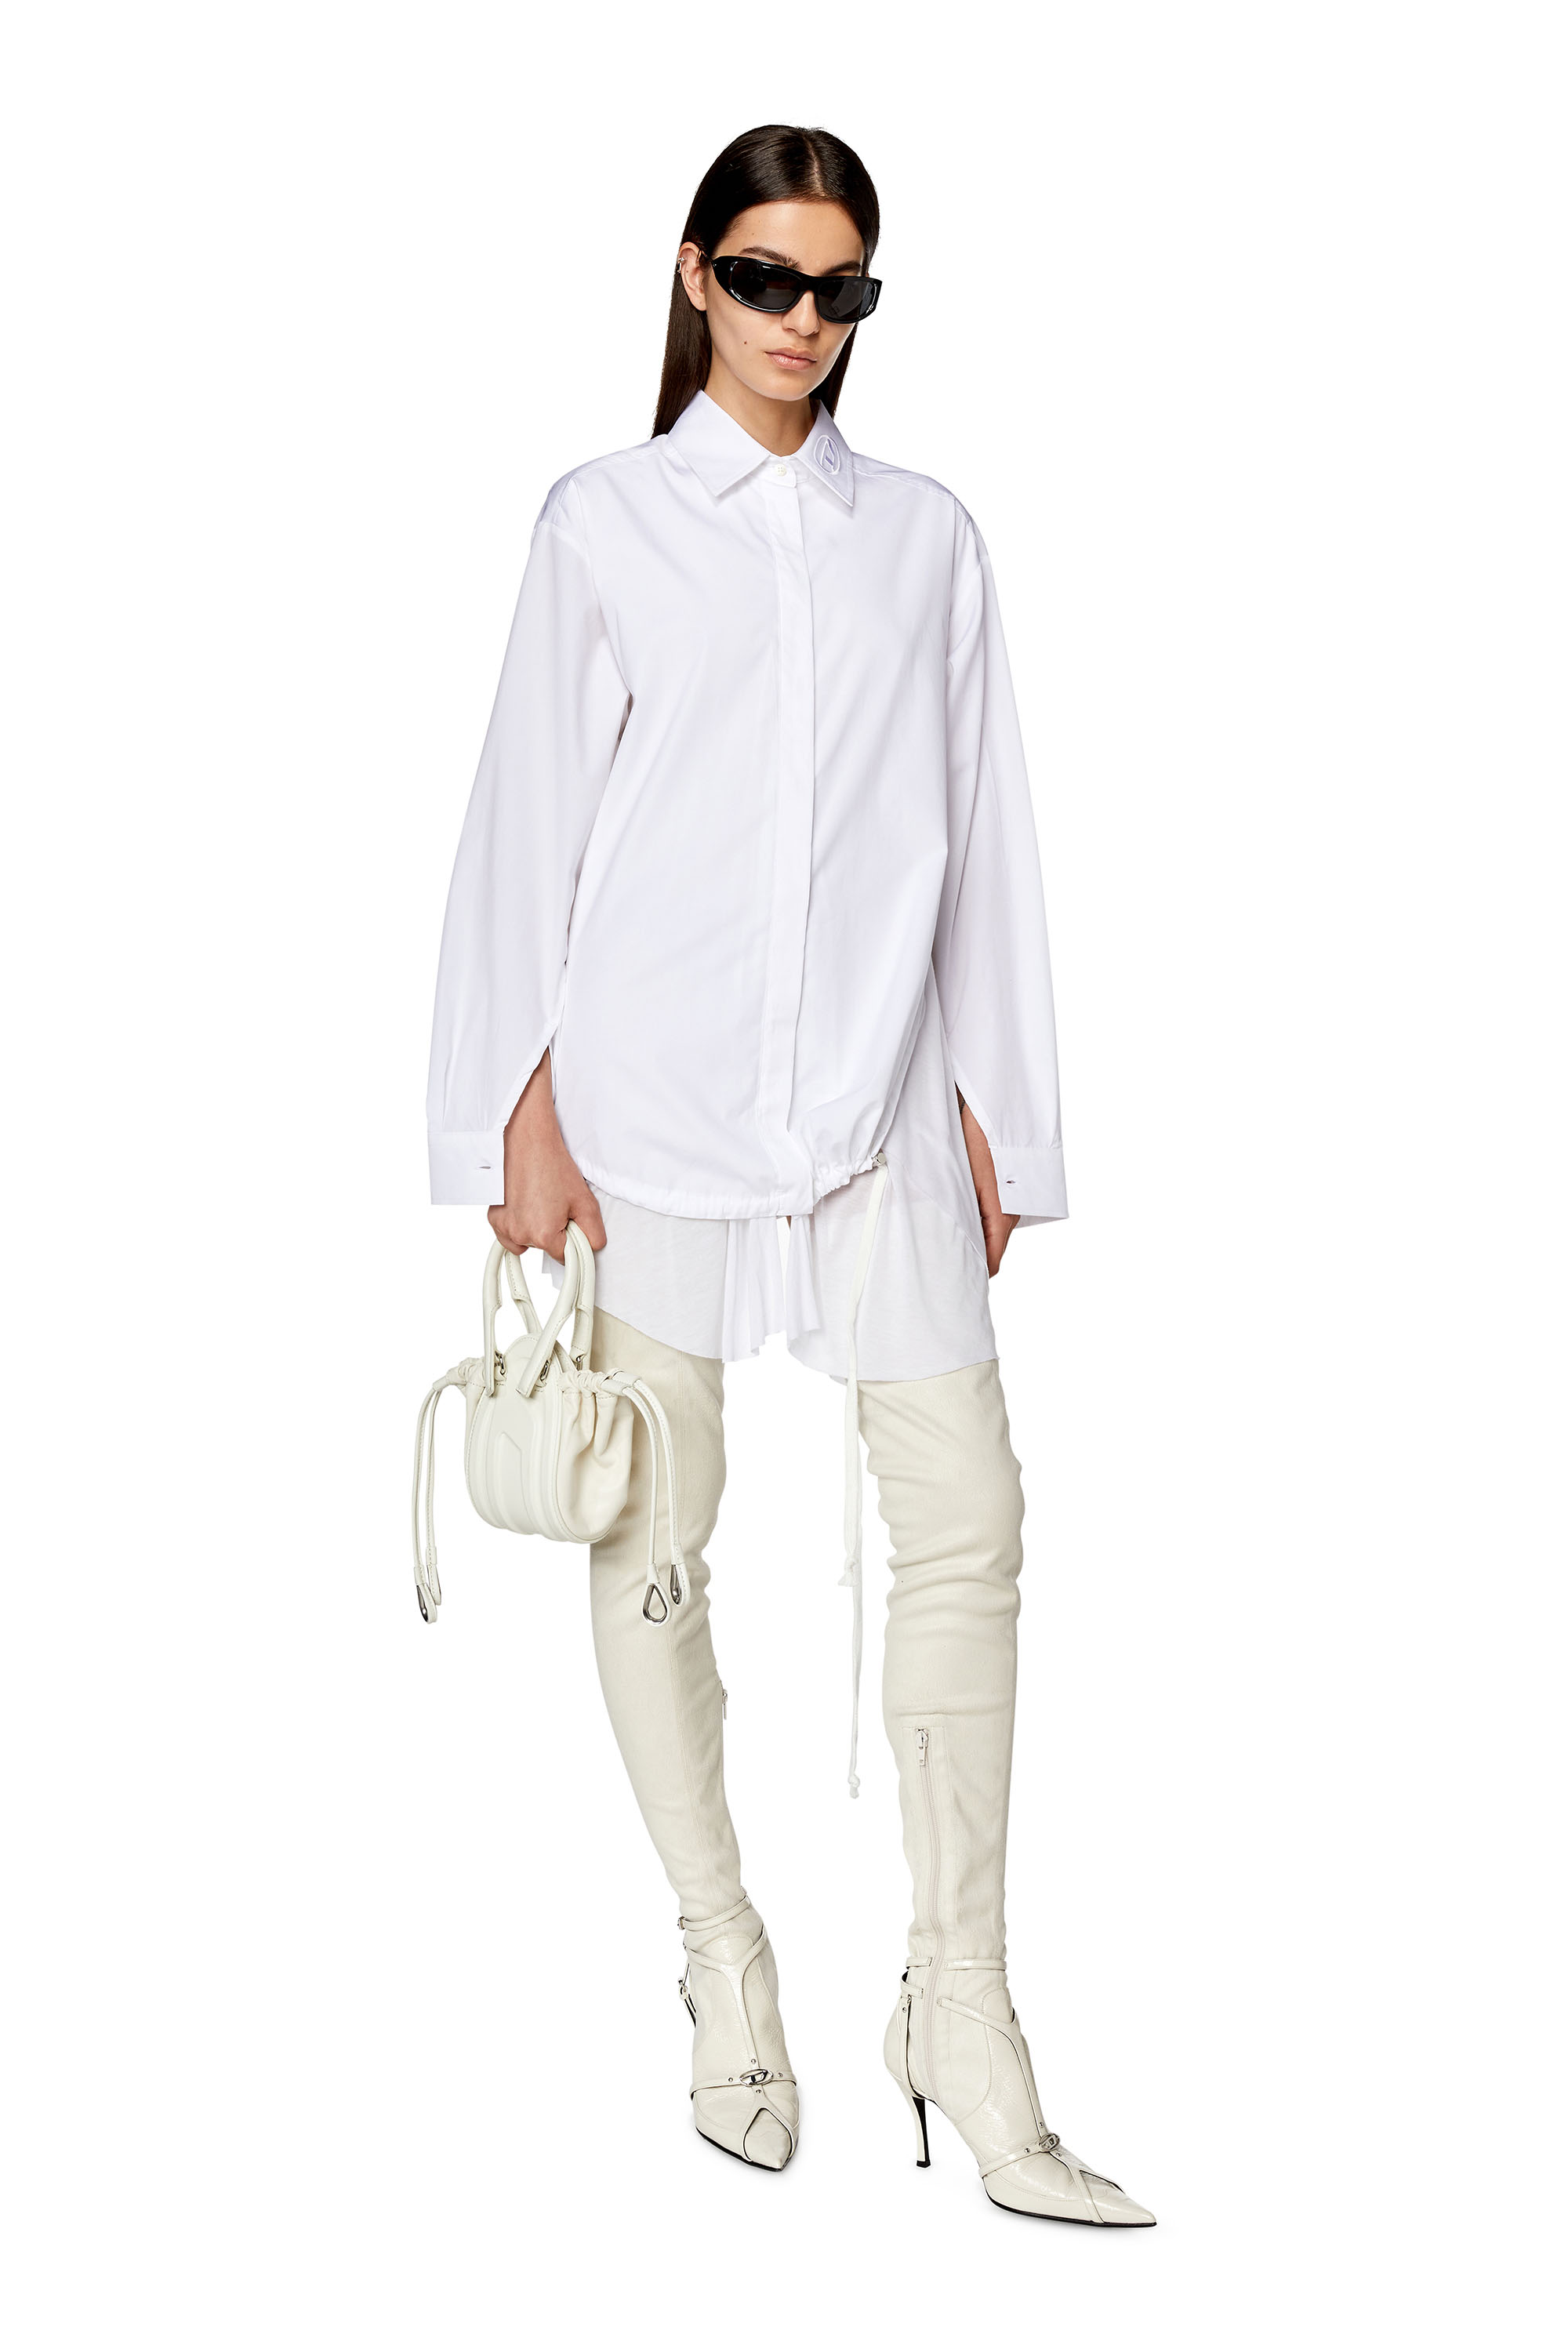 LSDJGDDE Long Sleeve Blouse Women Women Shirts Blouses Femme White Chiffon  Blouse Shirt Women Tops (Color : A, Size : 2XL Code) : : Clothing,  Shoes & Accessories